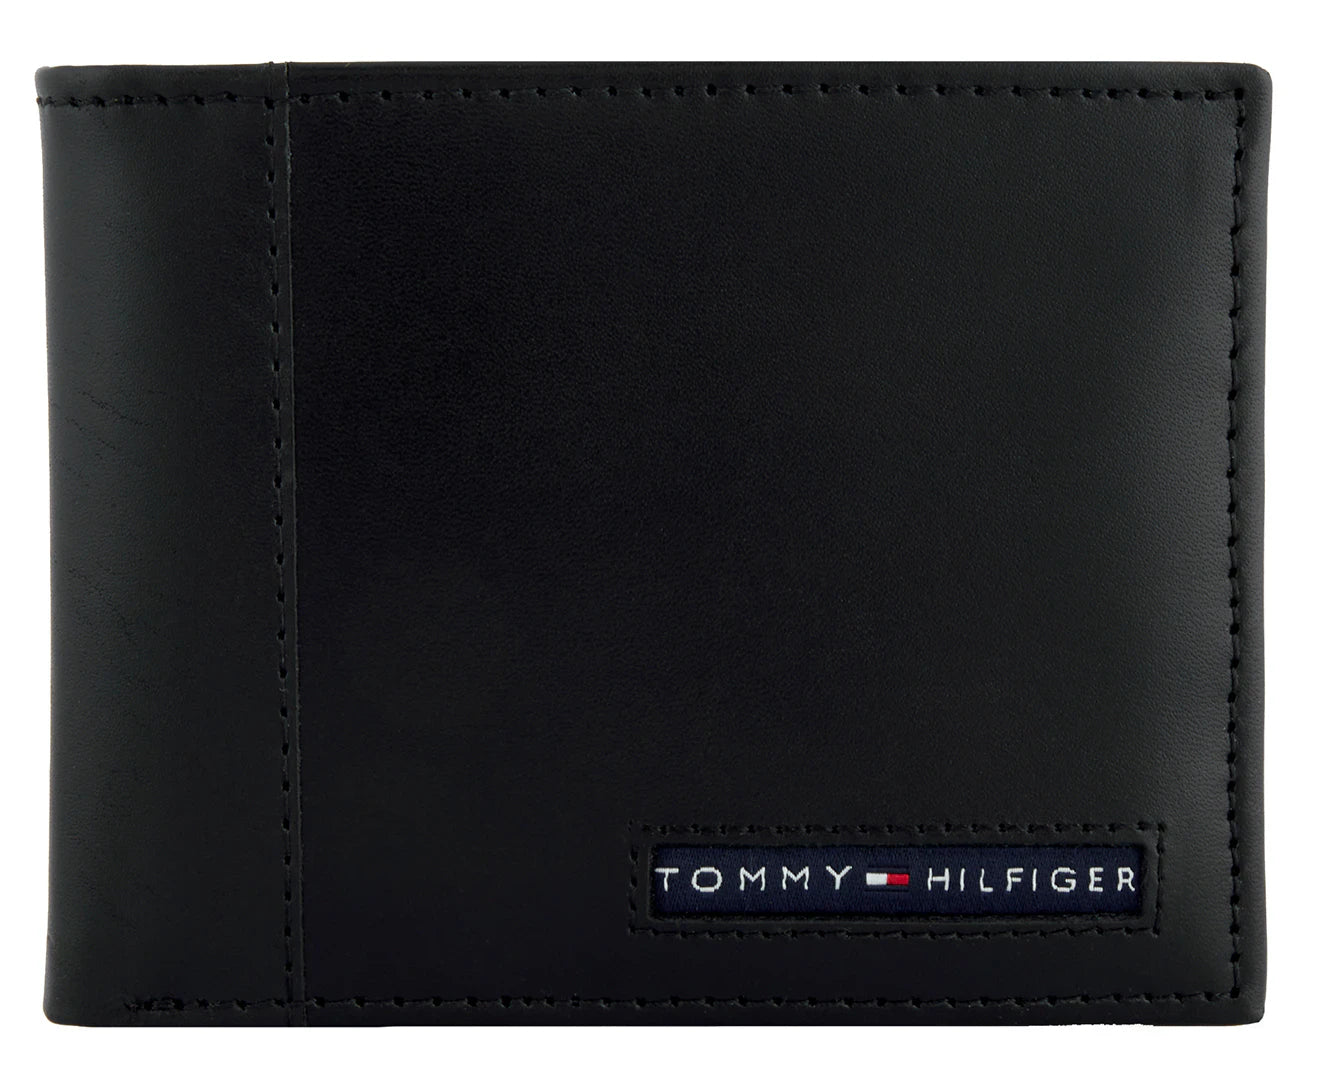 Tommy Hilfiger Men's Leather Wallet Cambridge Passcase Billfold Wallet, Black